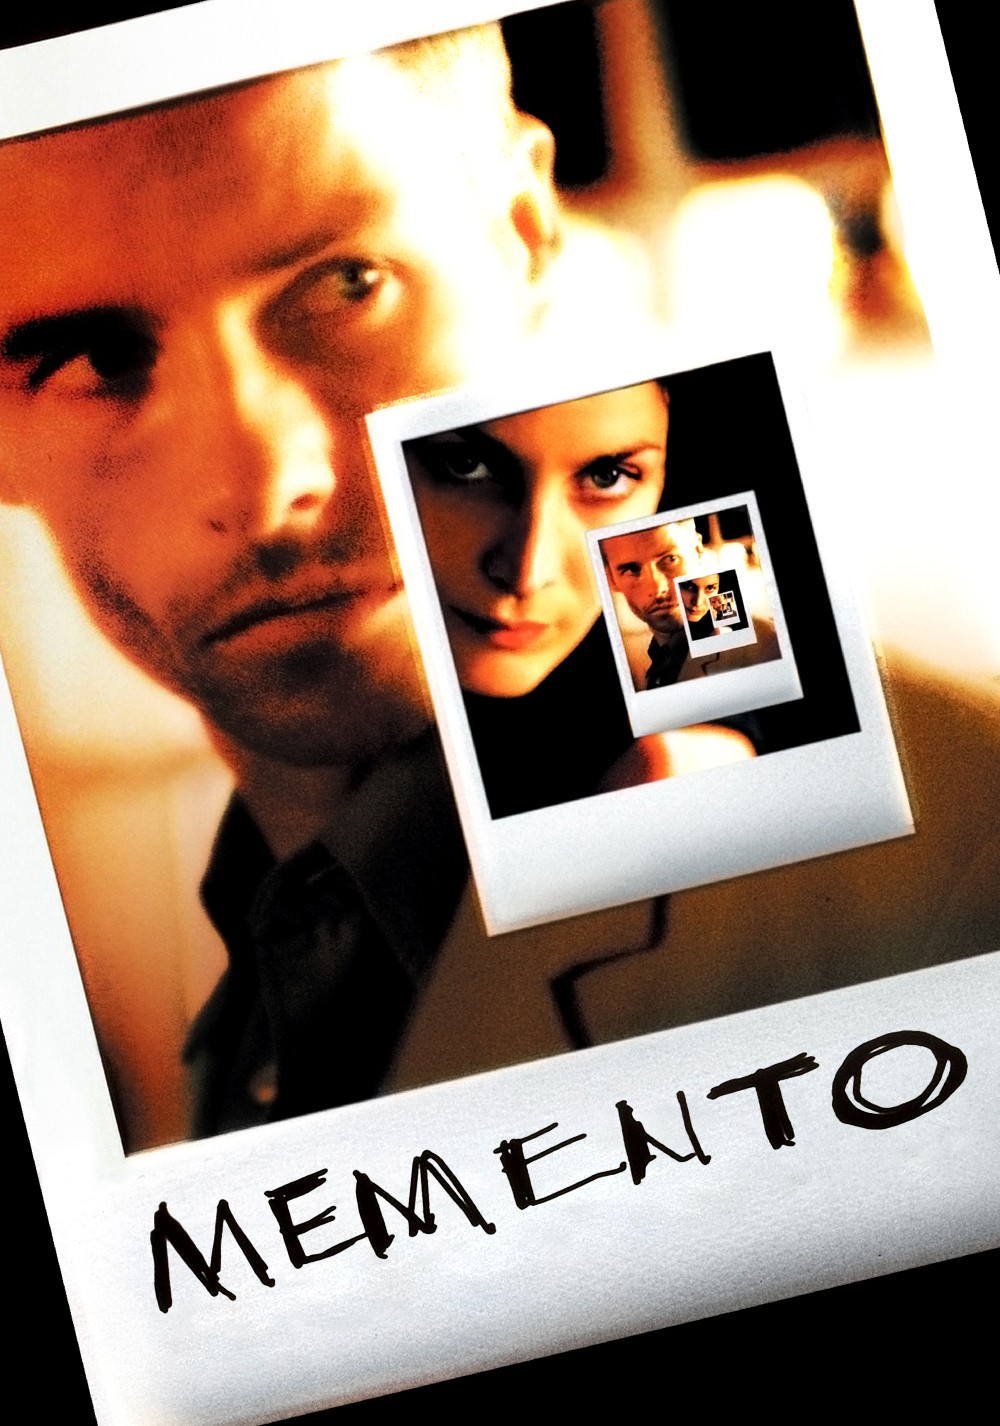 Poster Memento